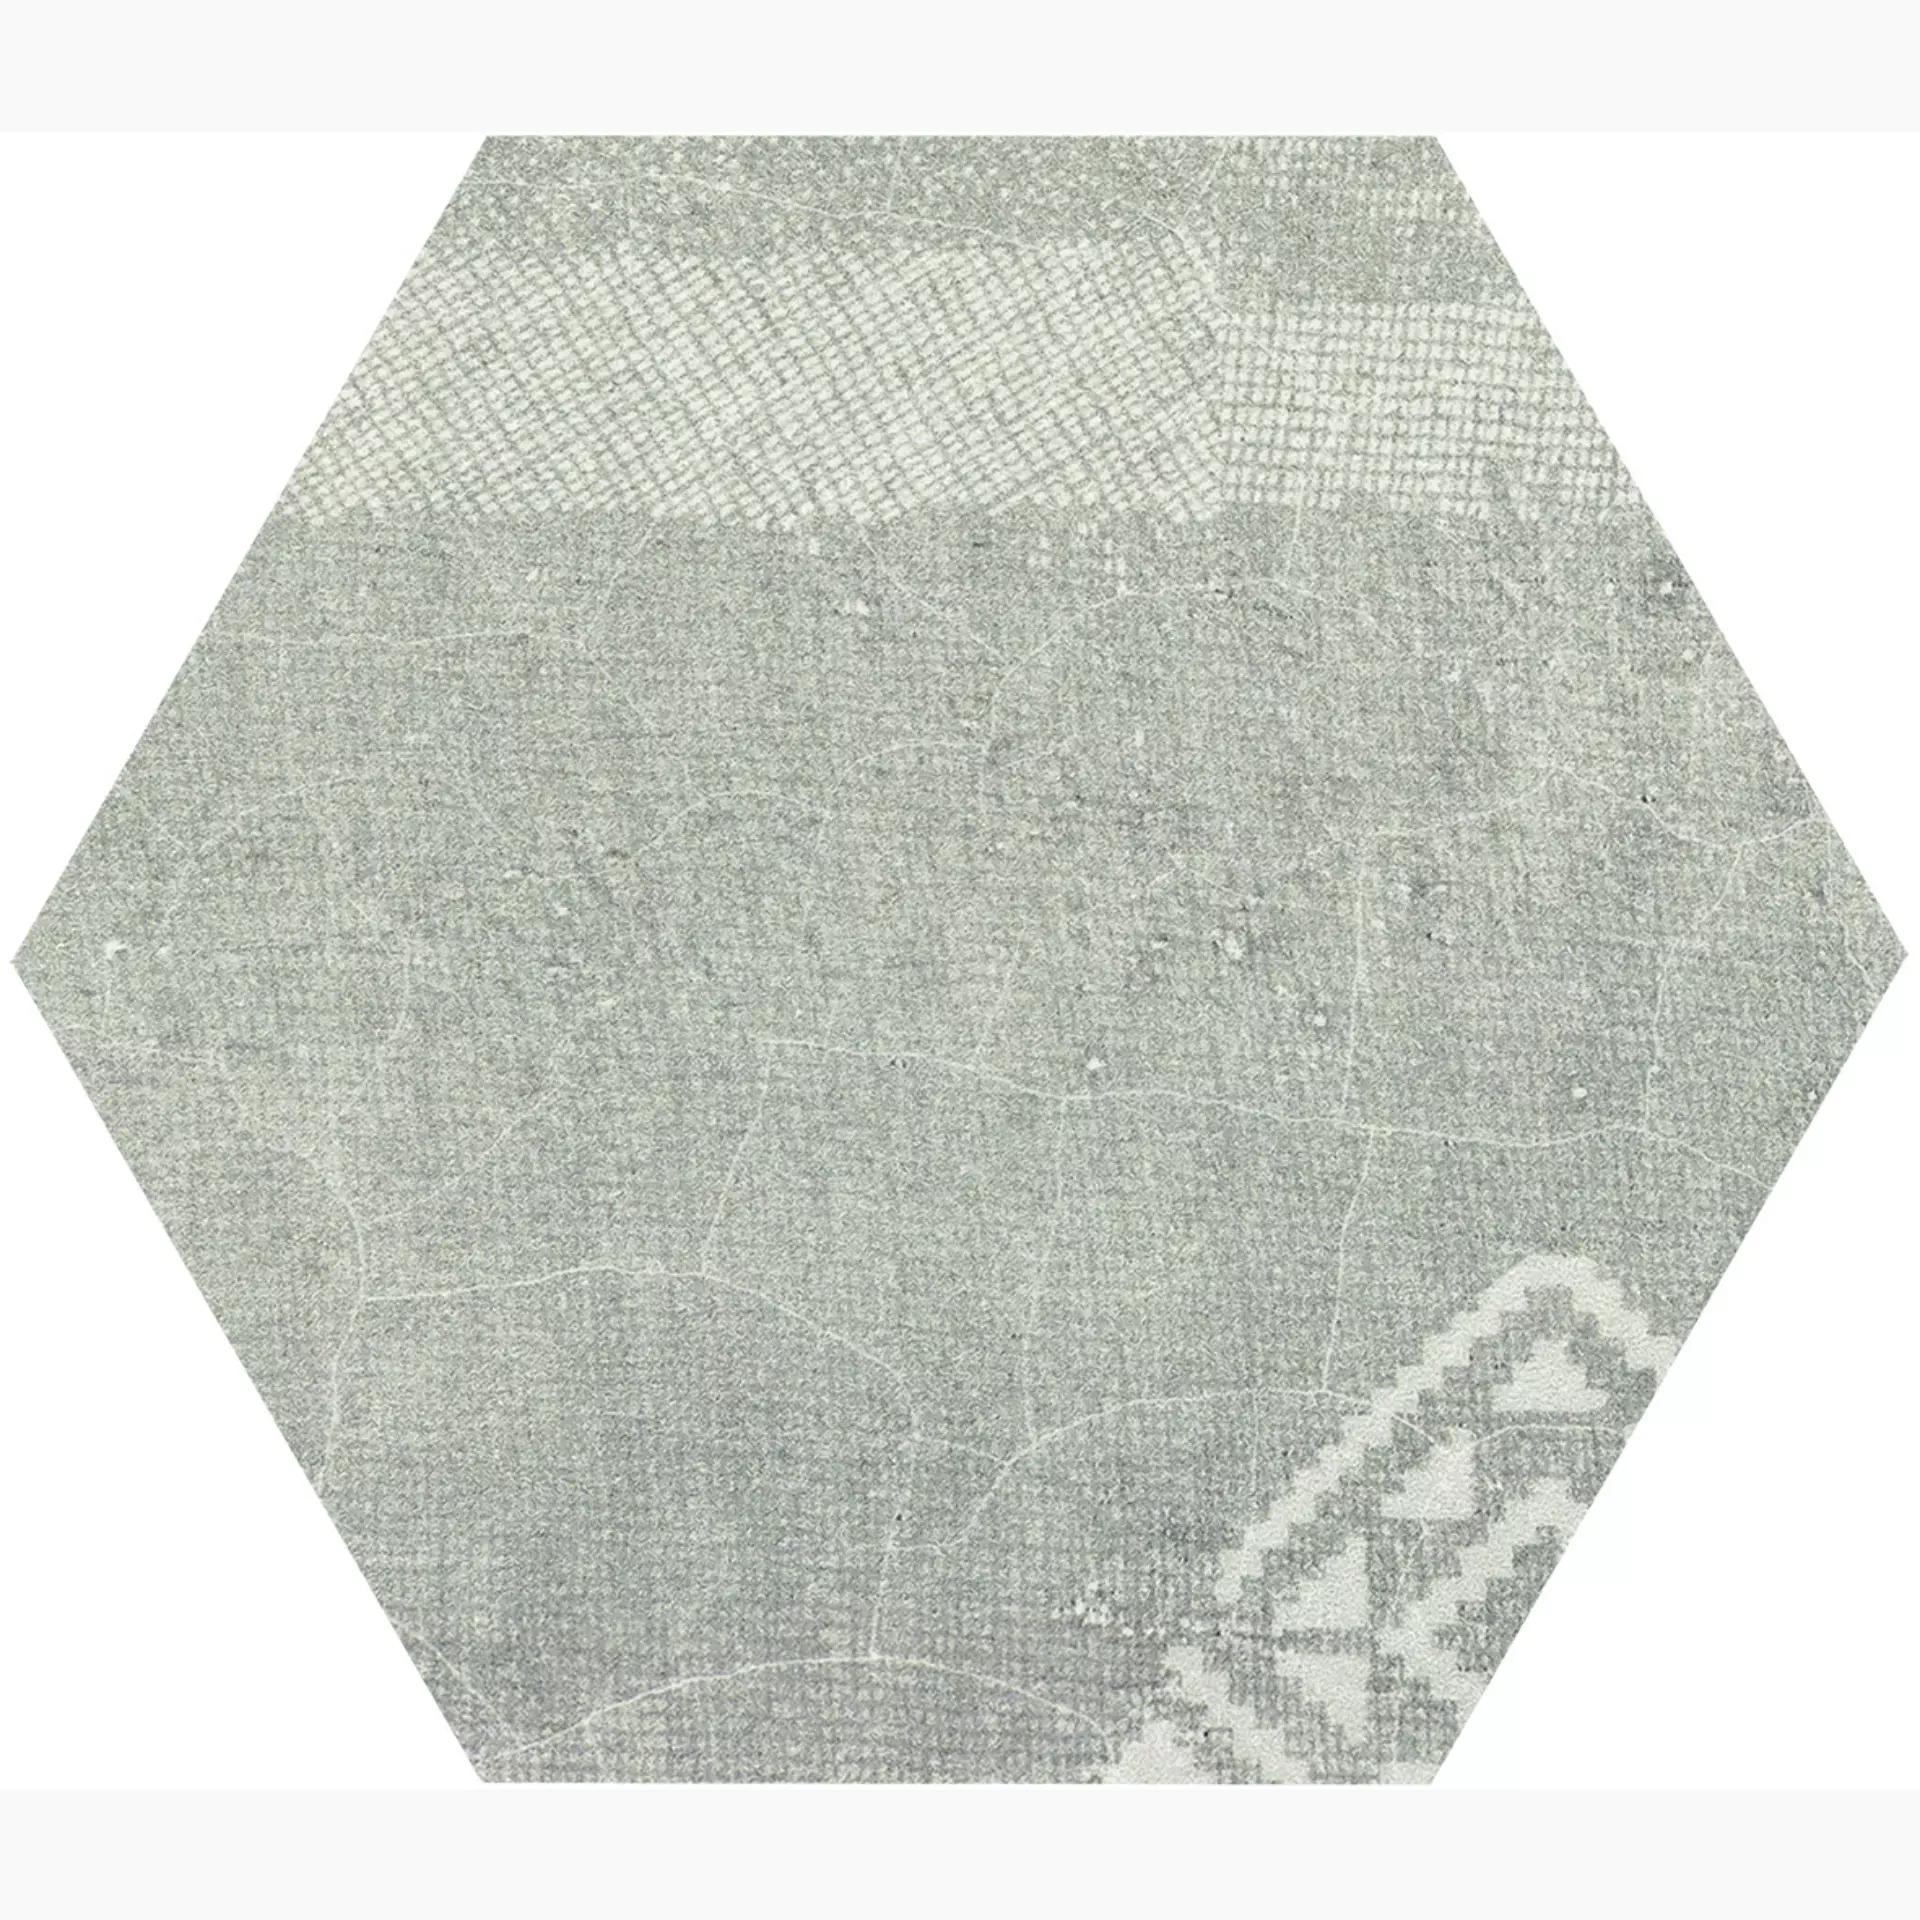 Provenza Gesso Pearl Grey Naturale Esagona Patchwork E3F2 25,5x29,4cm 9,5mm